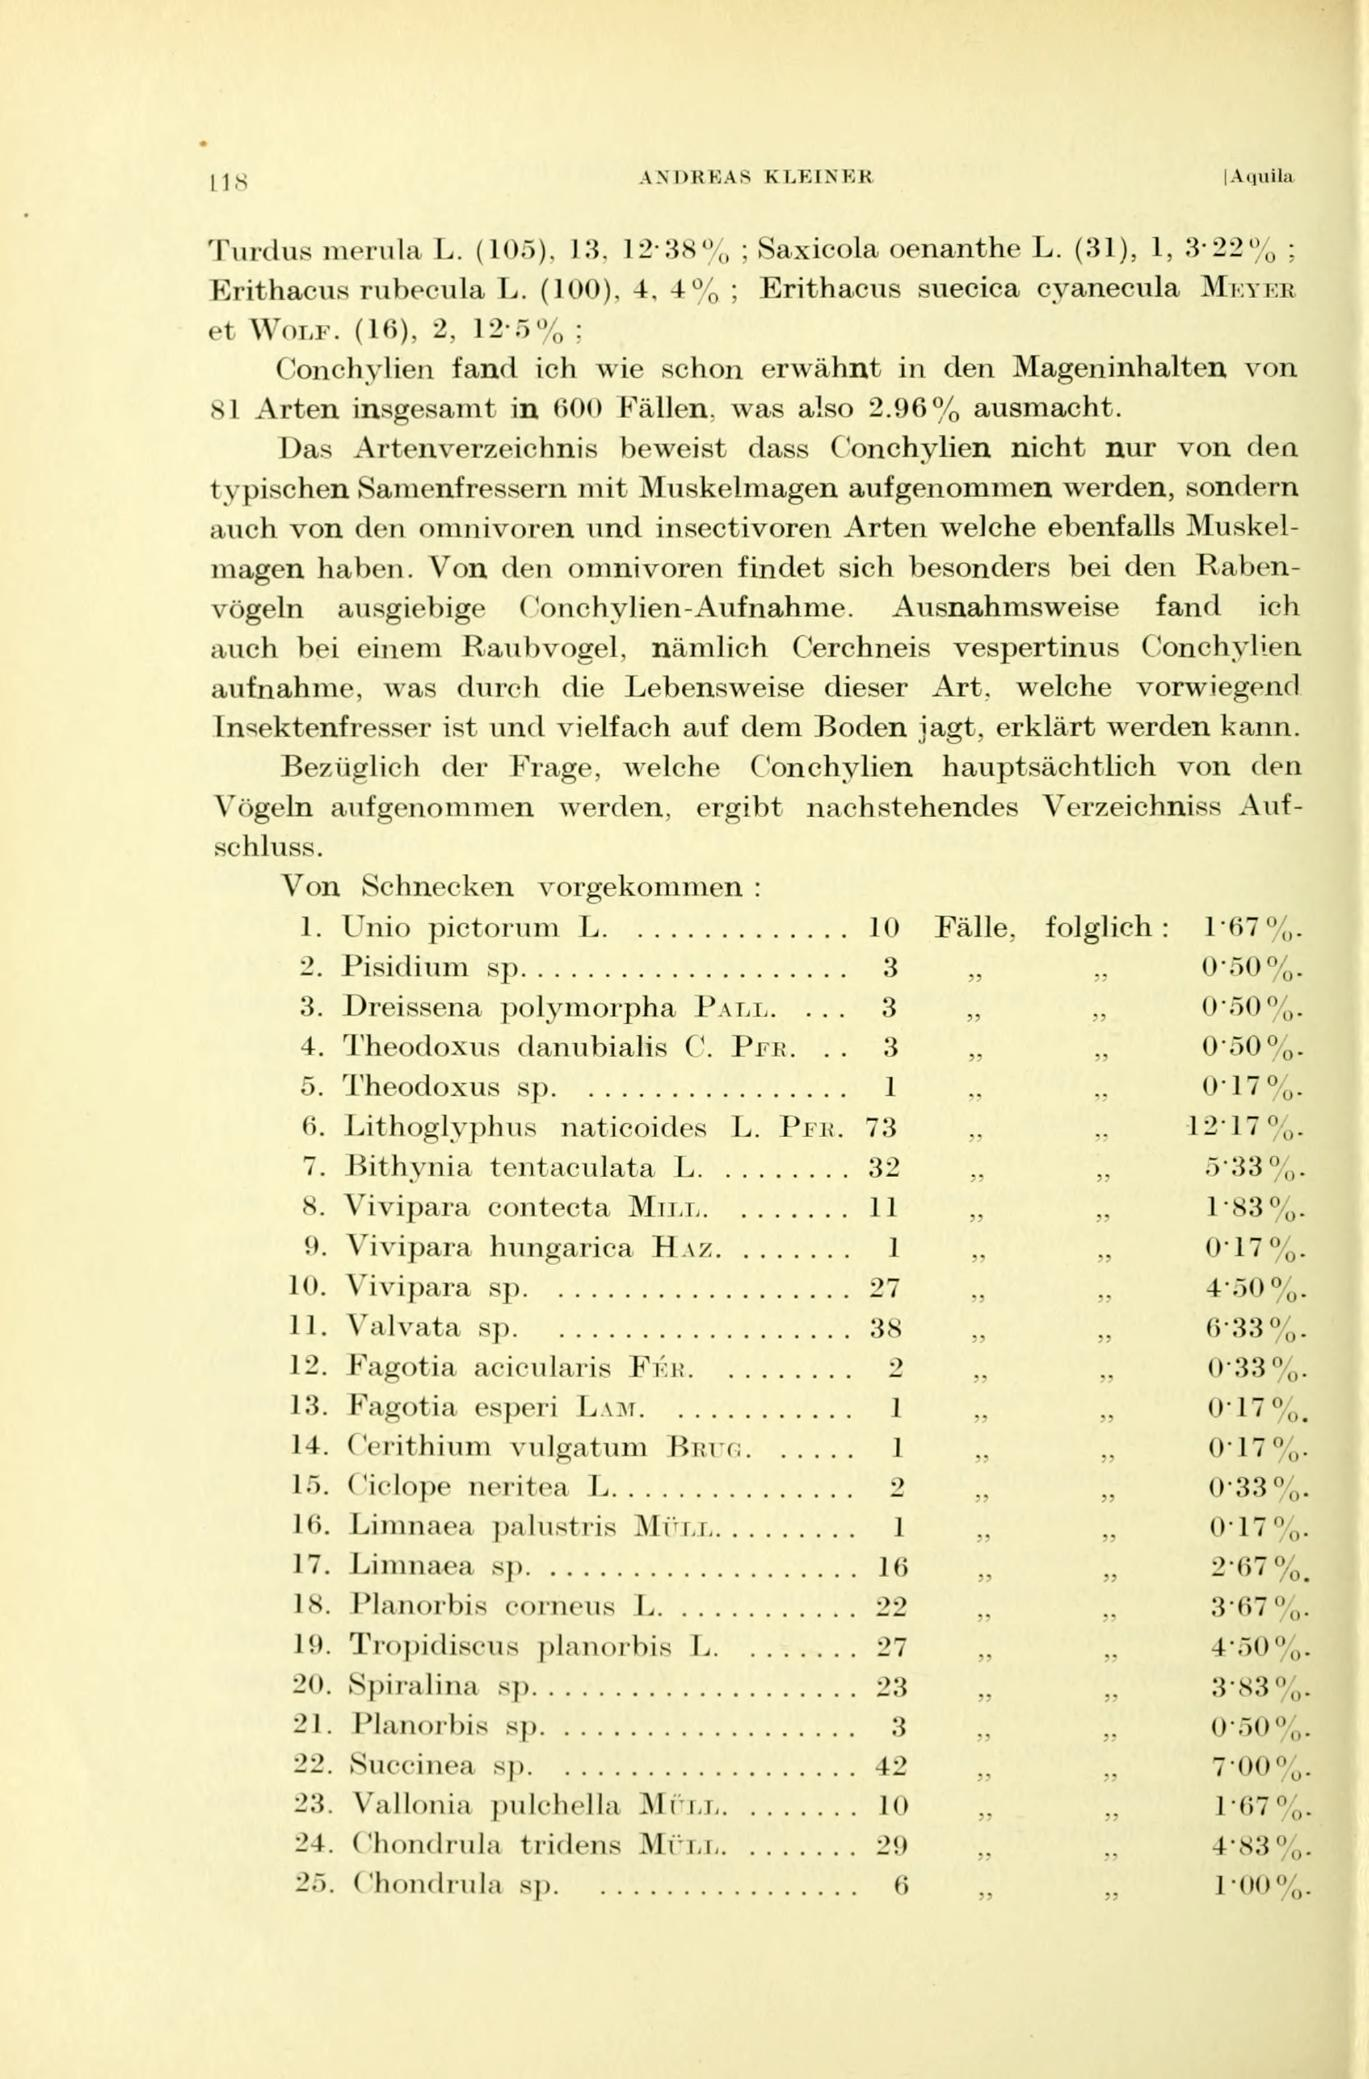 I 18 ANDREAS KLEINEB laquila Turdus mcrula L. (10.)). LS. 12-3N",, : Saxicola oenanthe L. (31), 1, 3'22% ; Erithacus rubecula L. (100). 4. 4 ; Erithacus suecica cyanecula et WOLF.